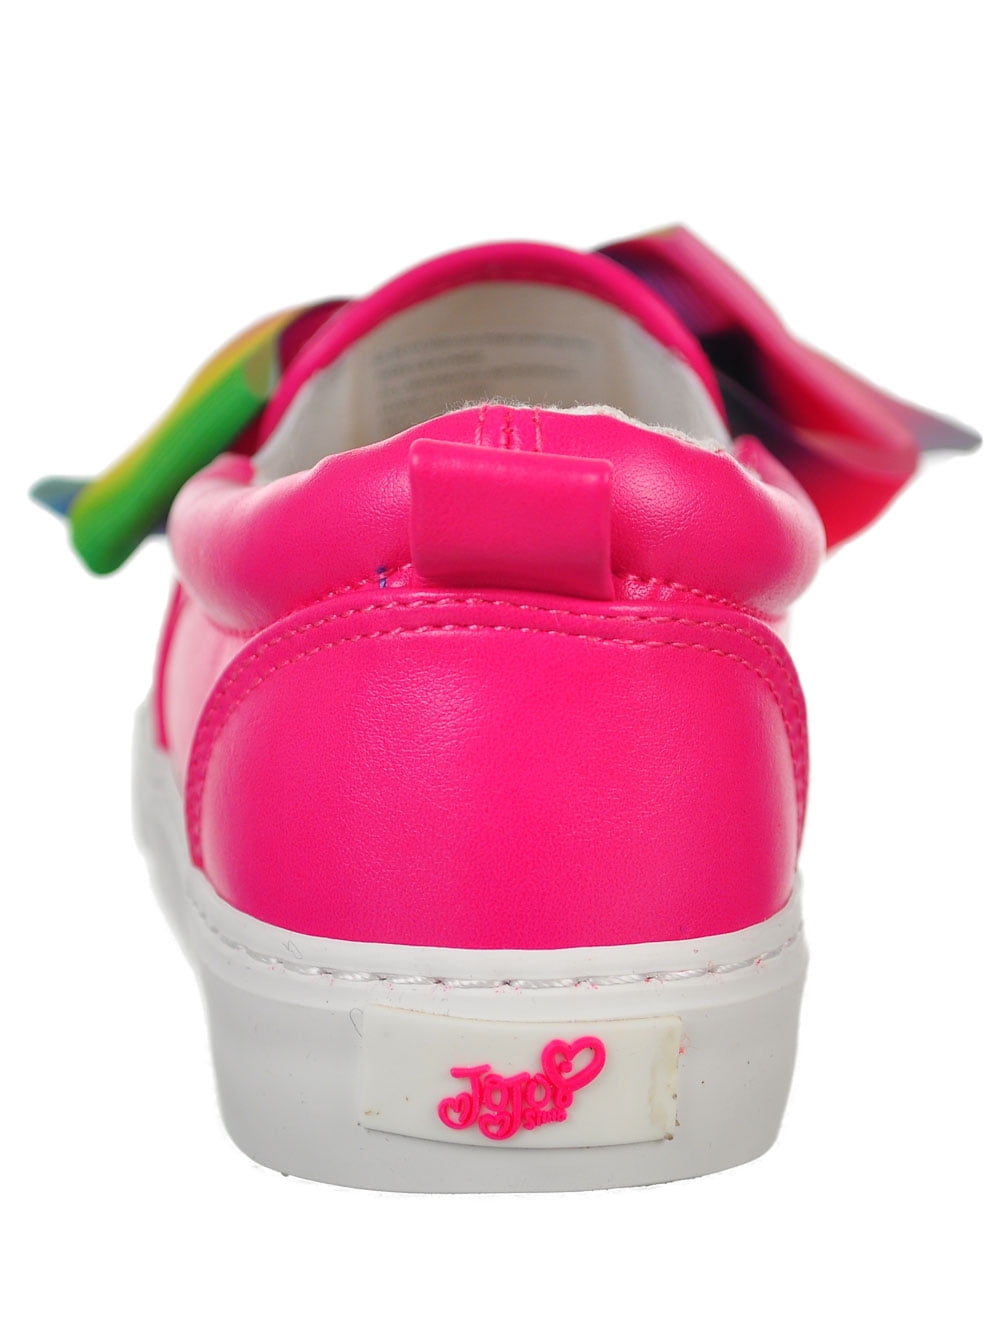 Nickelodeon Jo Jo Siwa Sneaker CH64140M Girls Toddler-Youth Oxford